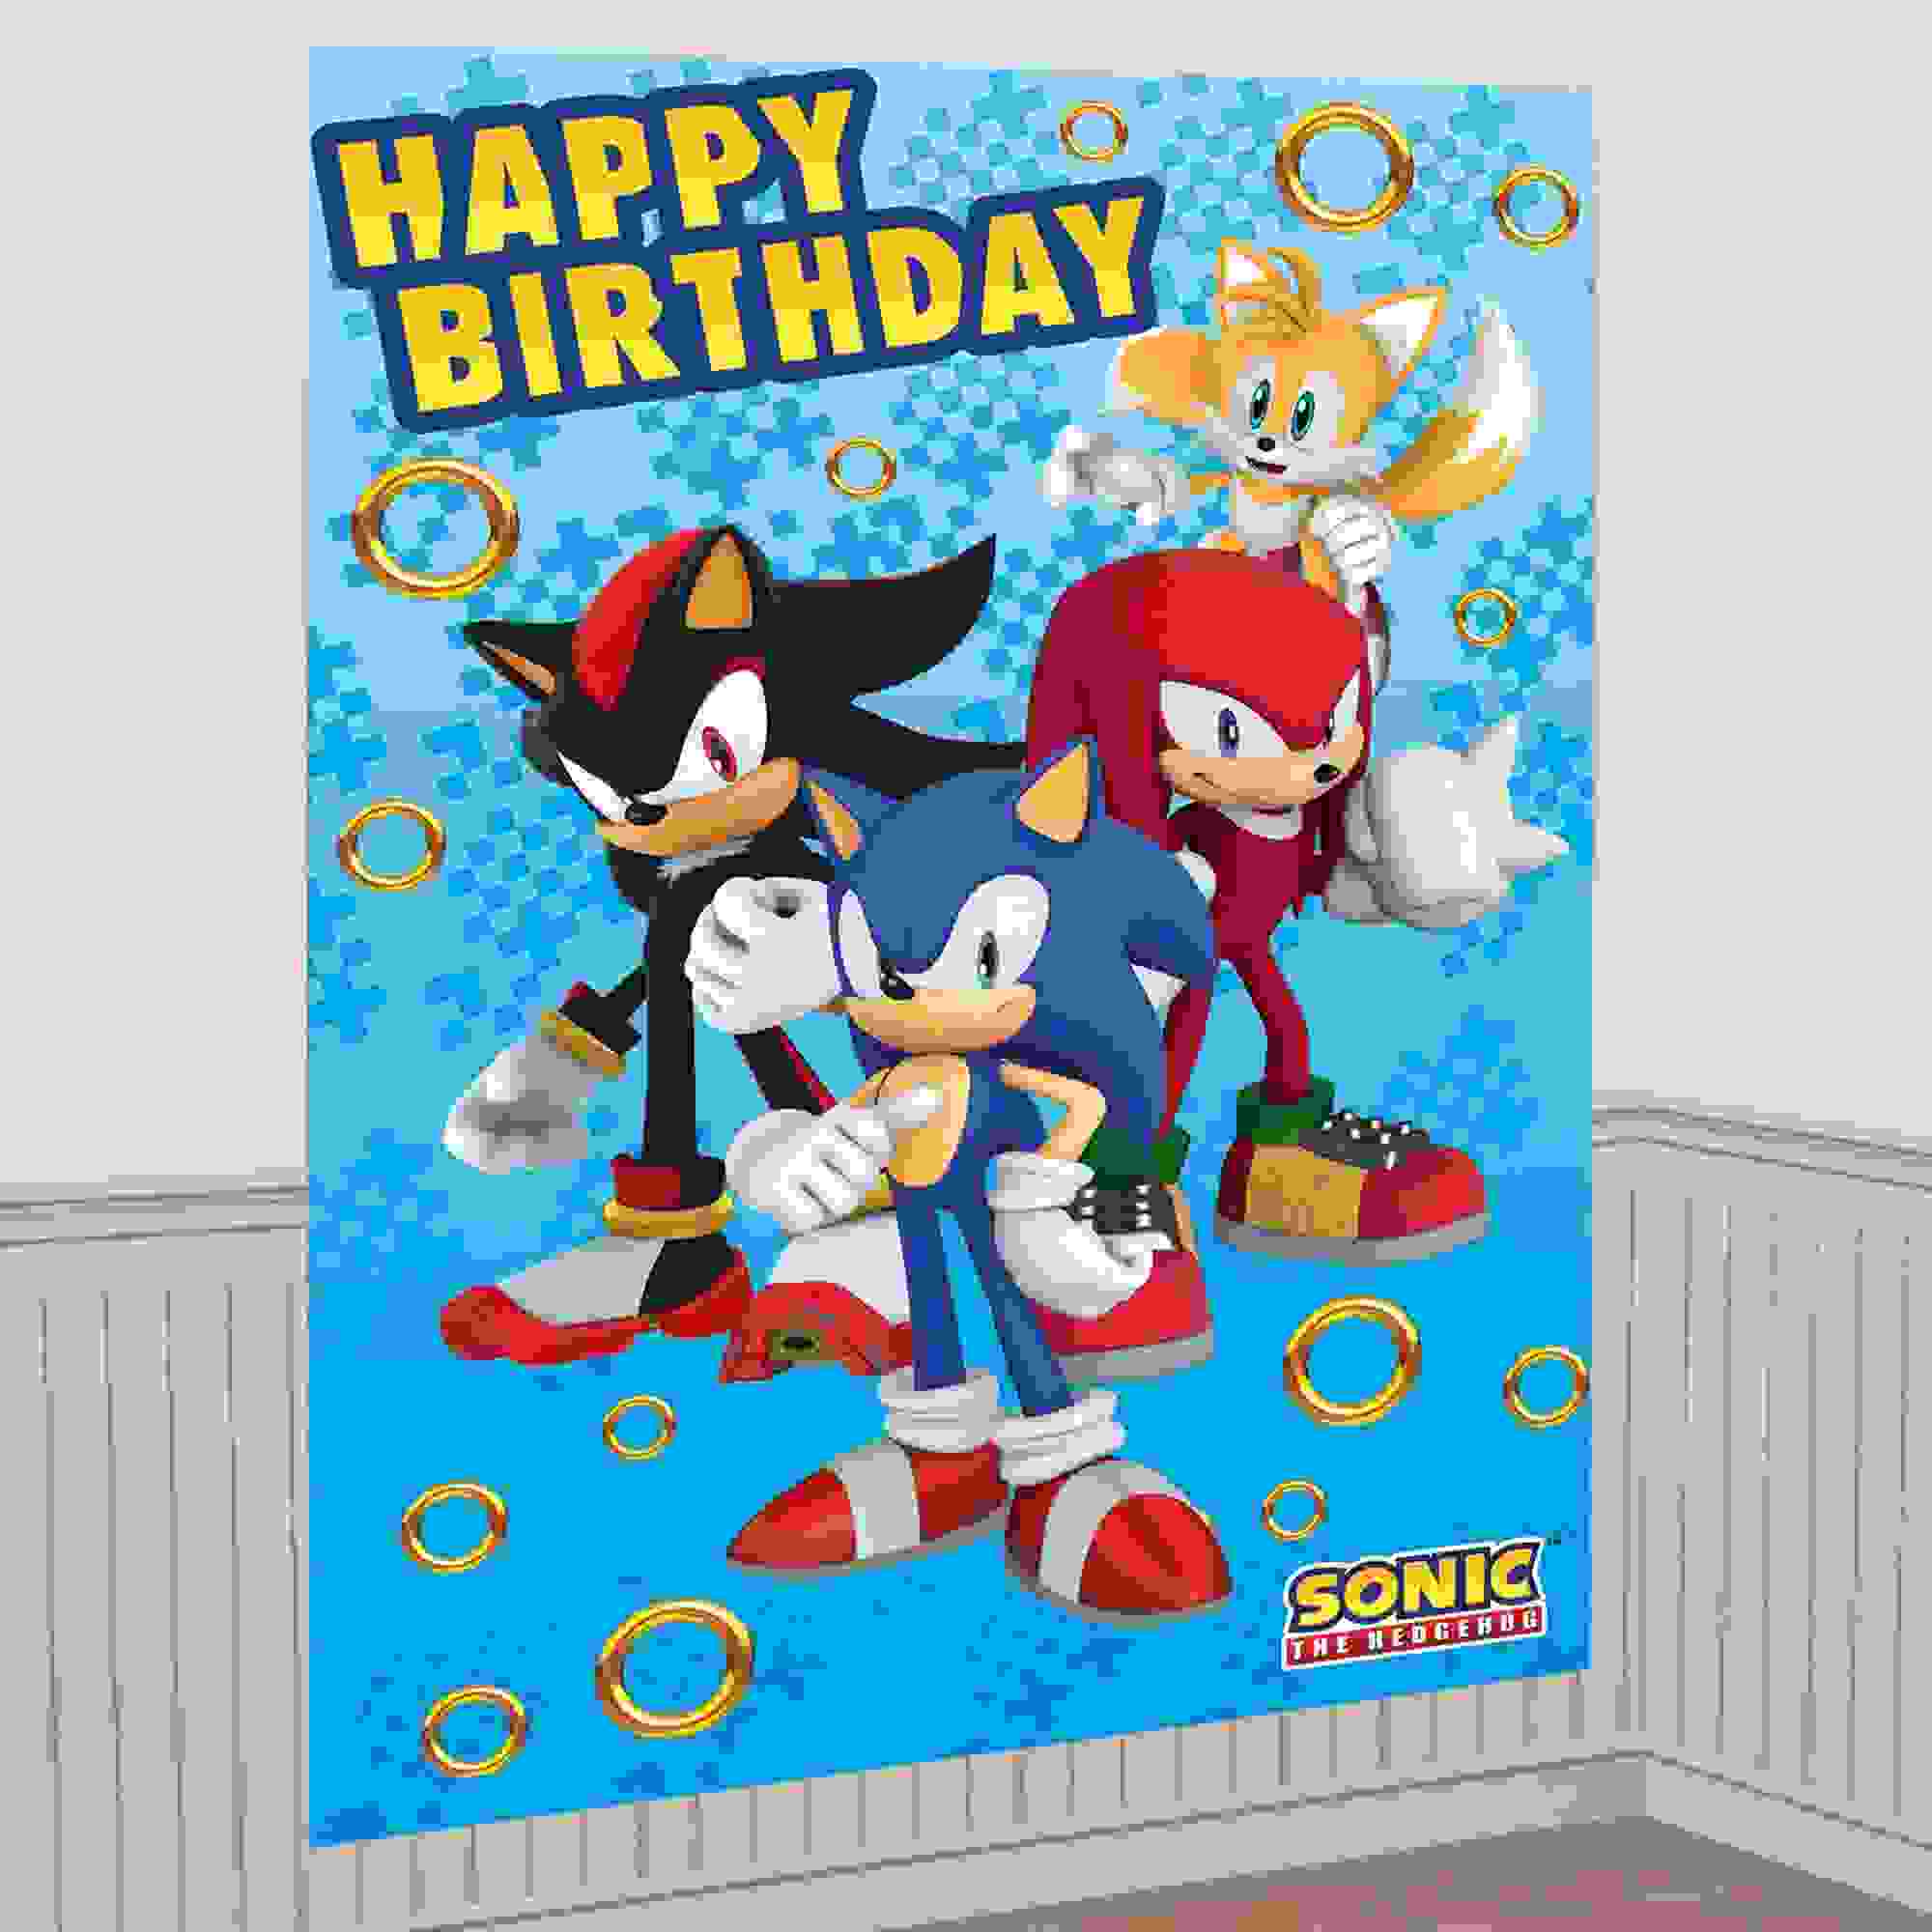 Sonic the Hedgehog Decorating Kit